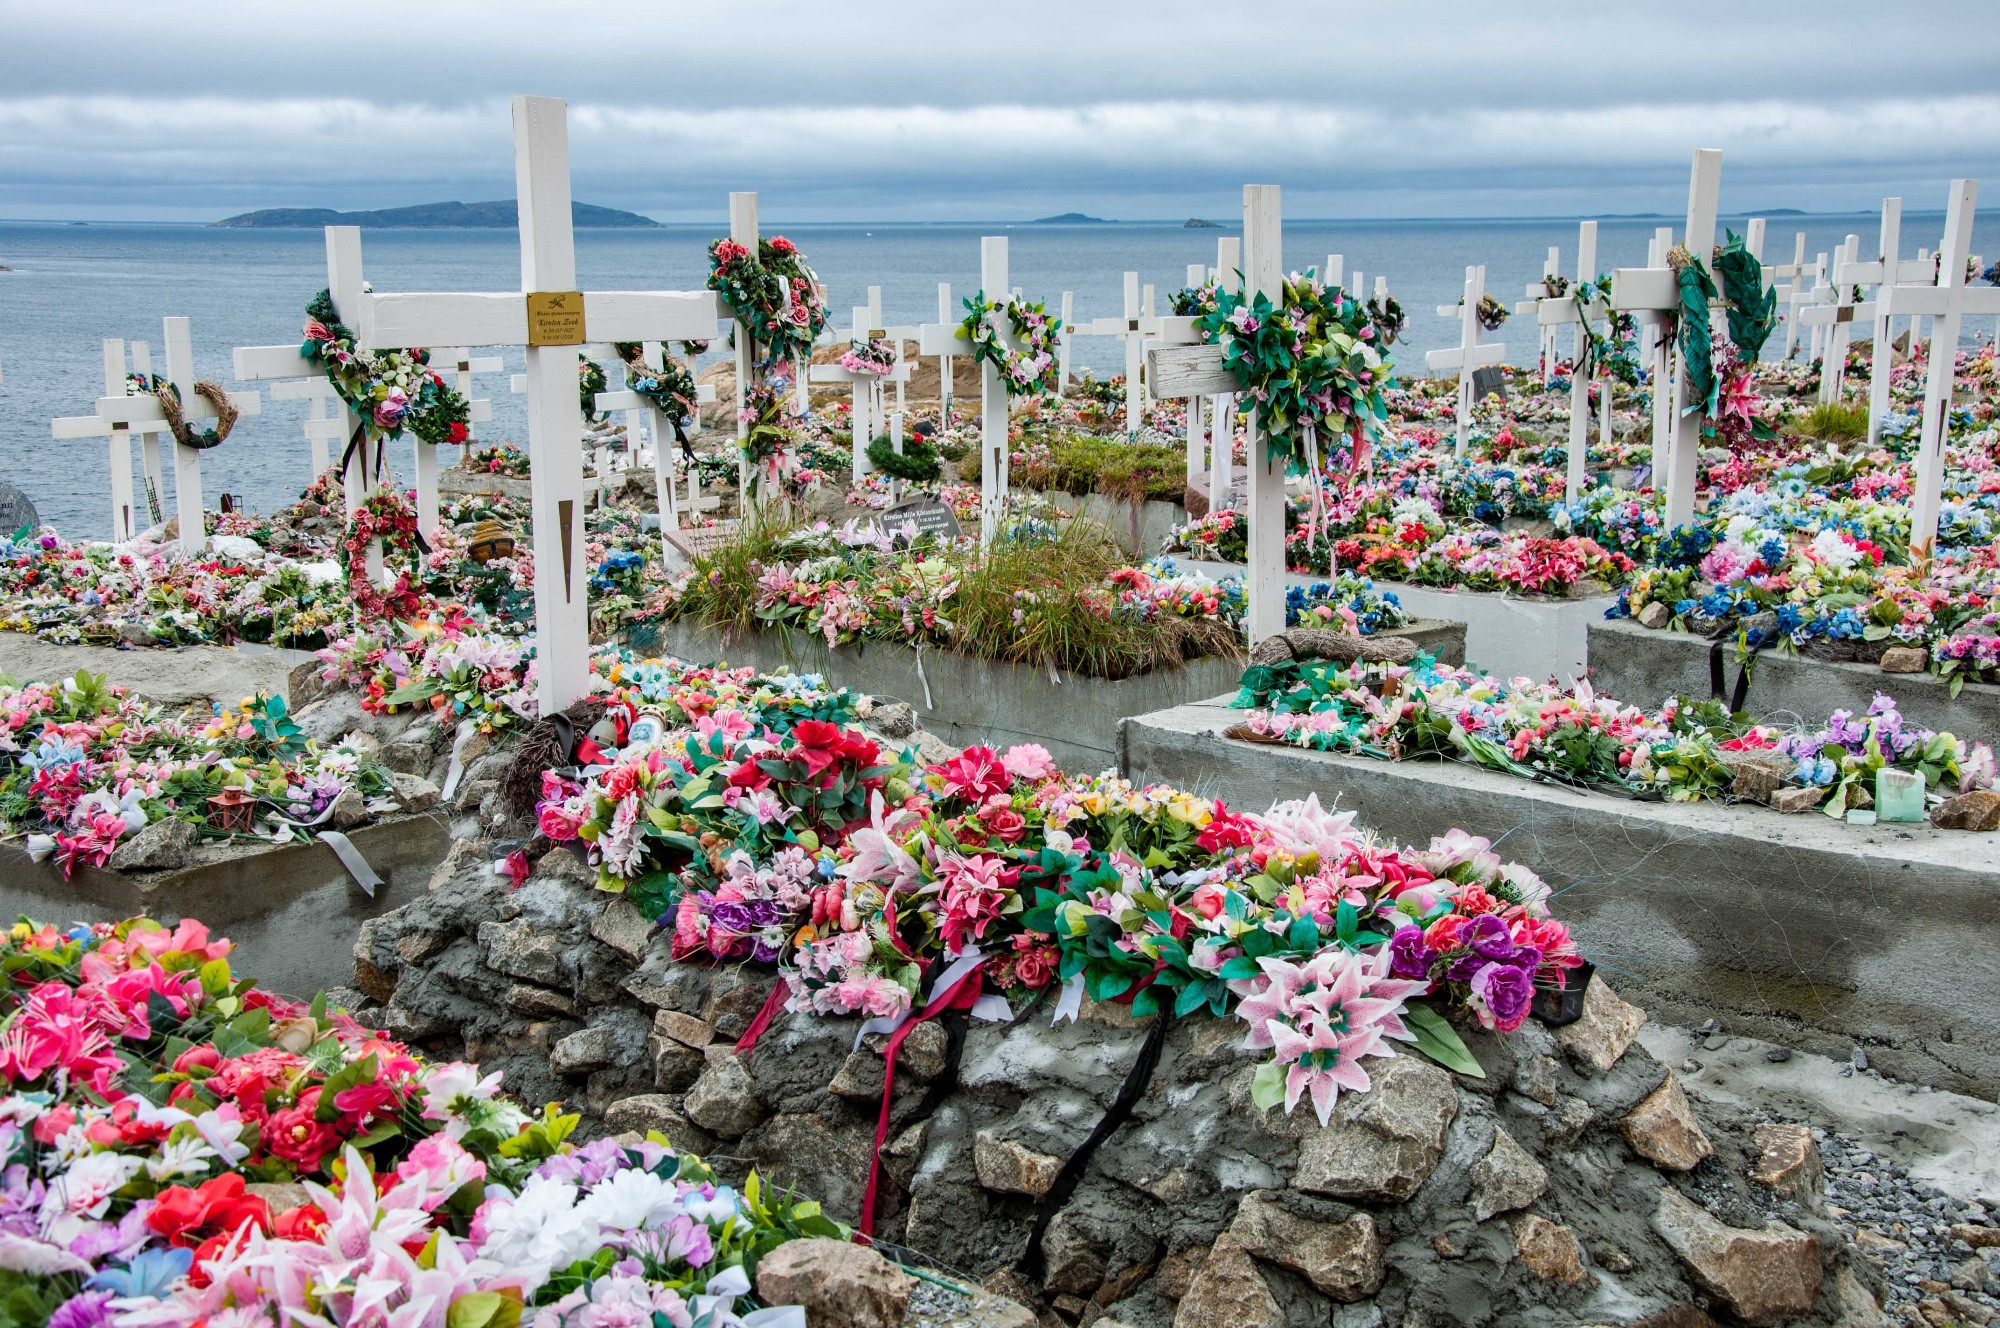 Cemetery in Upernavik